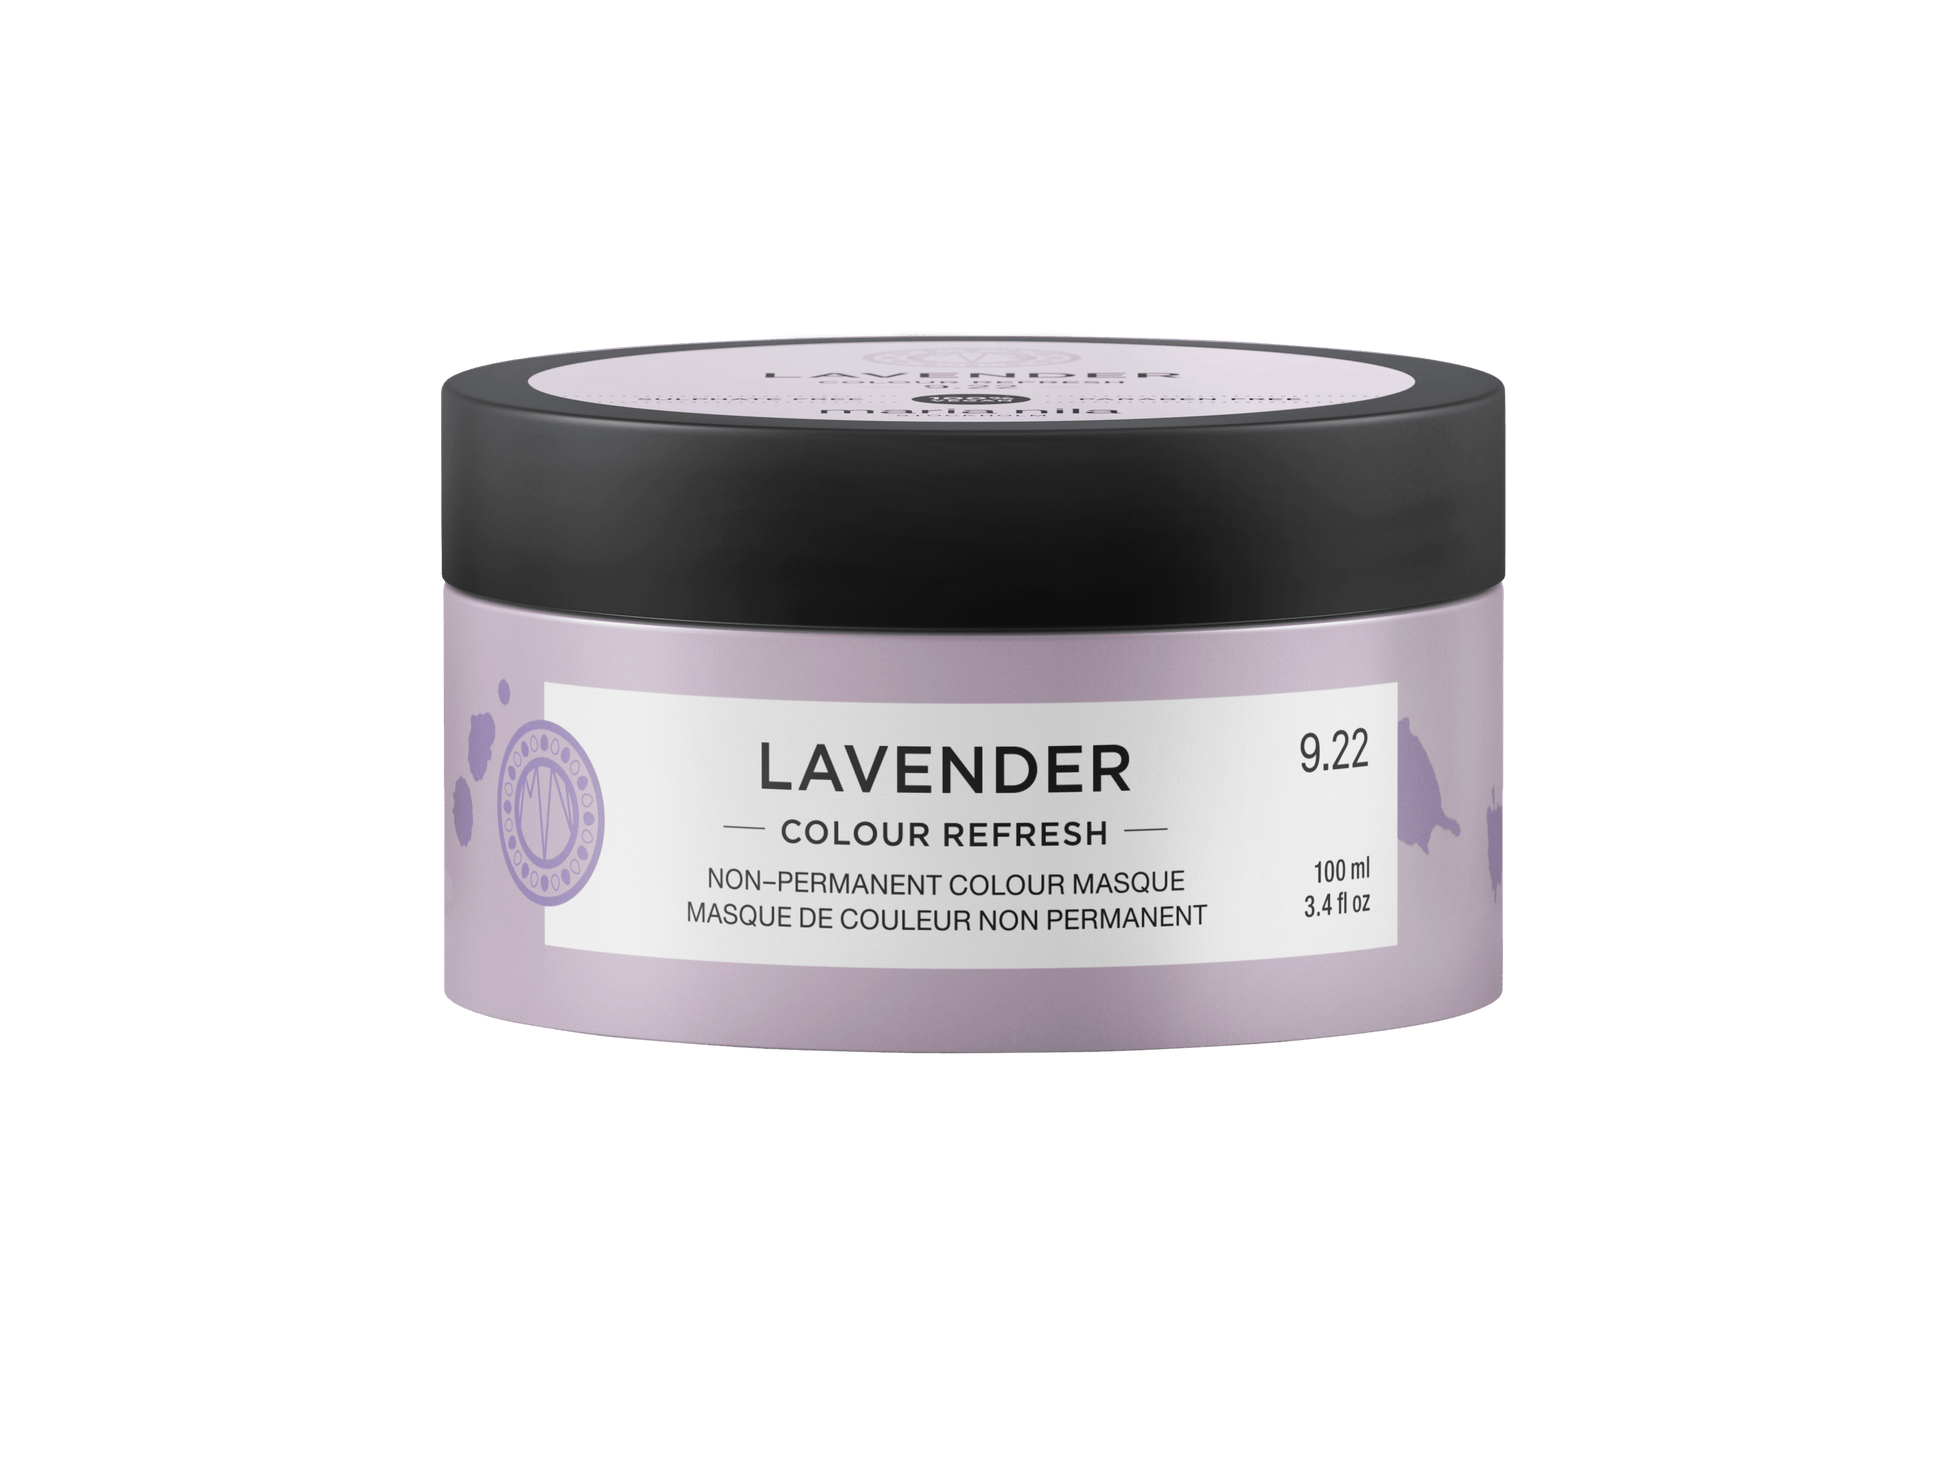 Colour Refresh Lavender - The Coloroom 